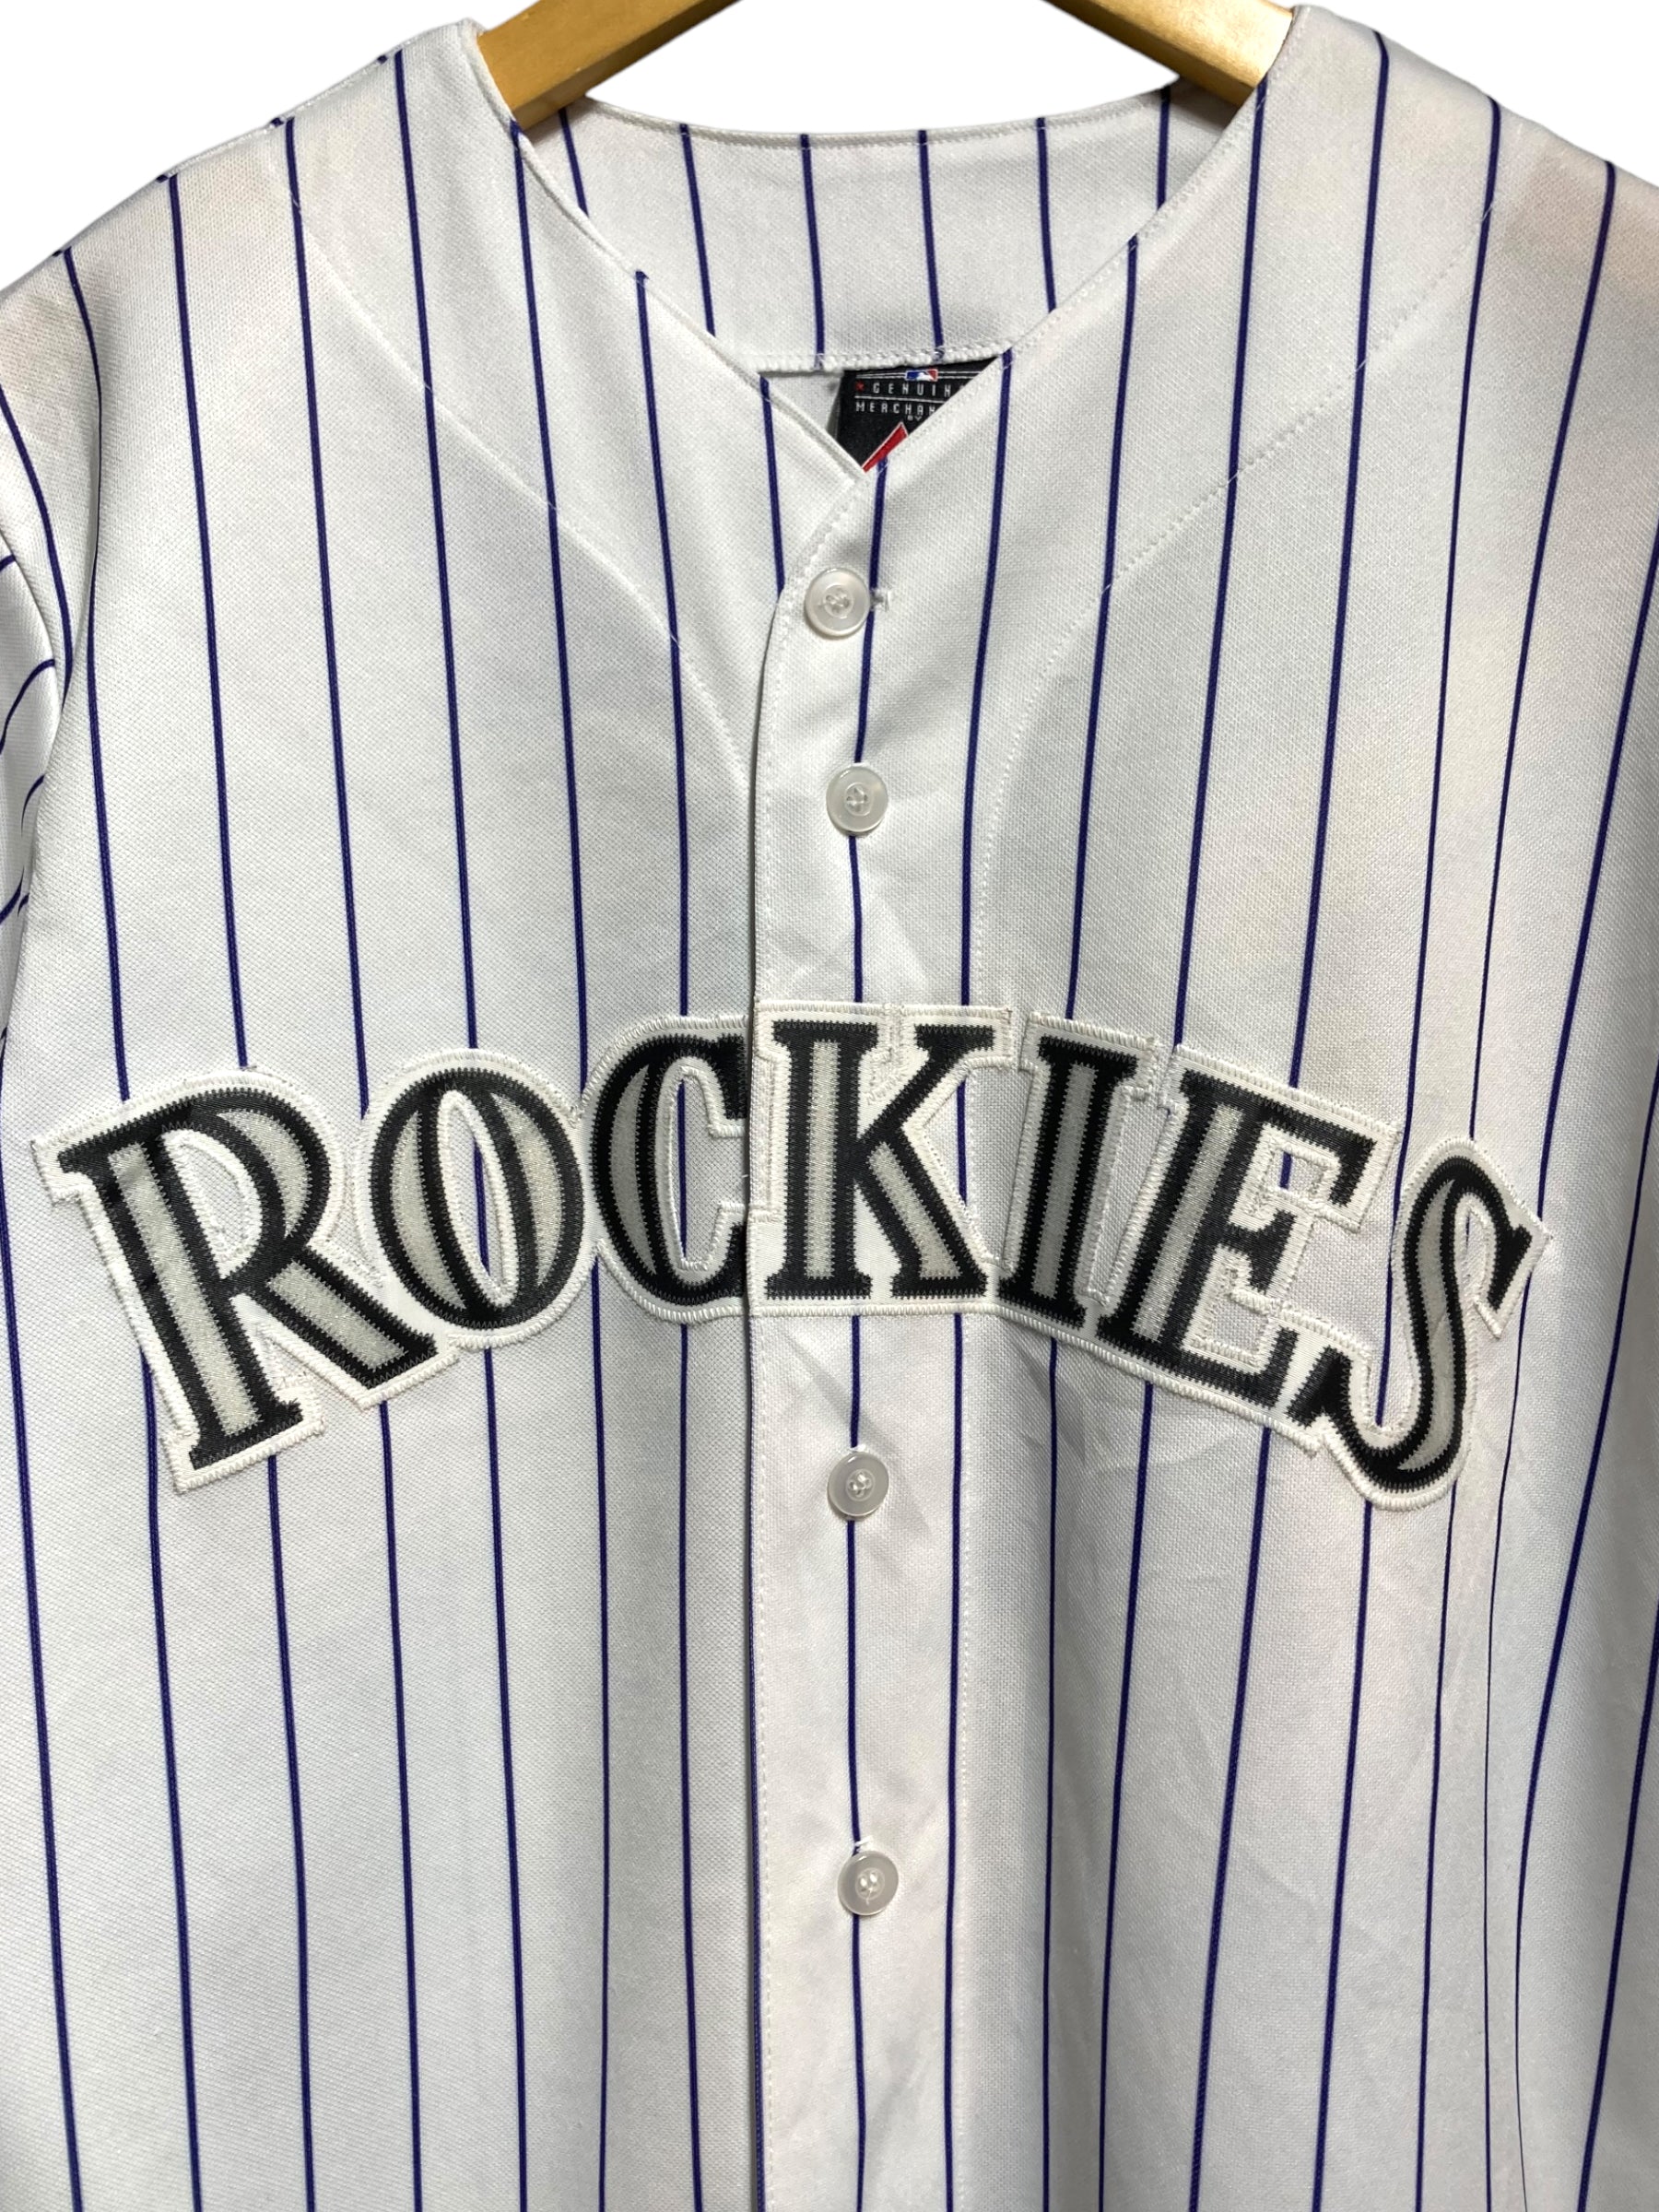 ROCKIES ロッキーズ Majestic MLB BASEBALL ベースボールシャツ ユニフォーム